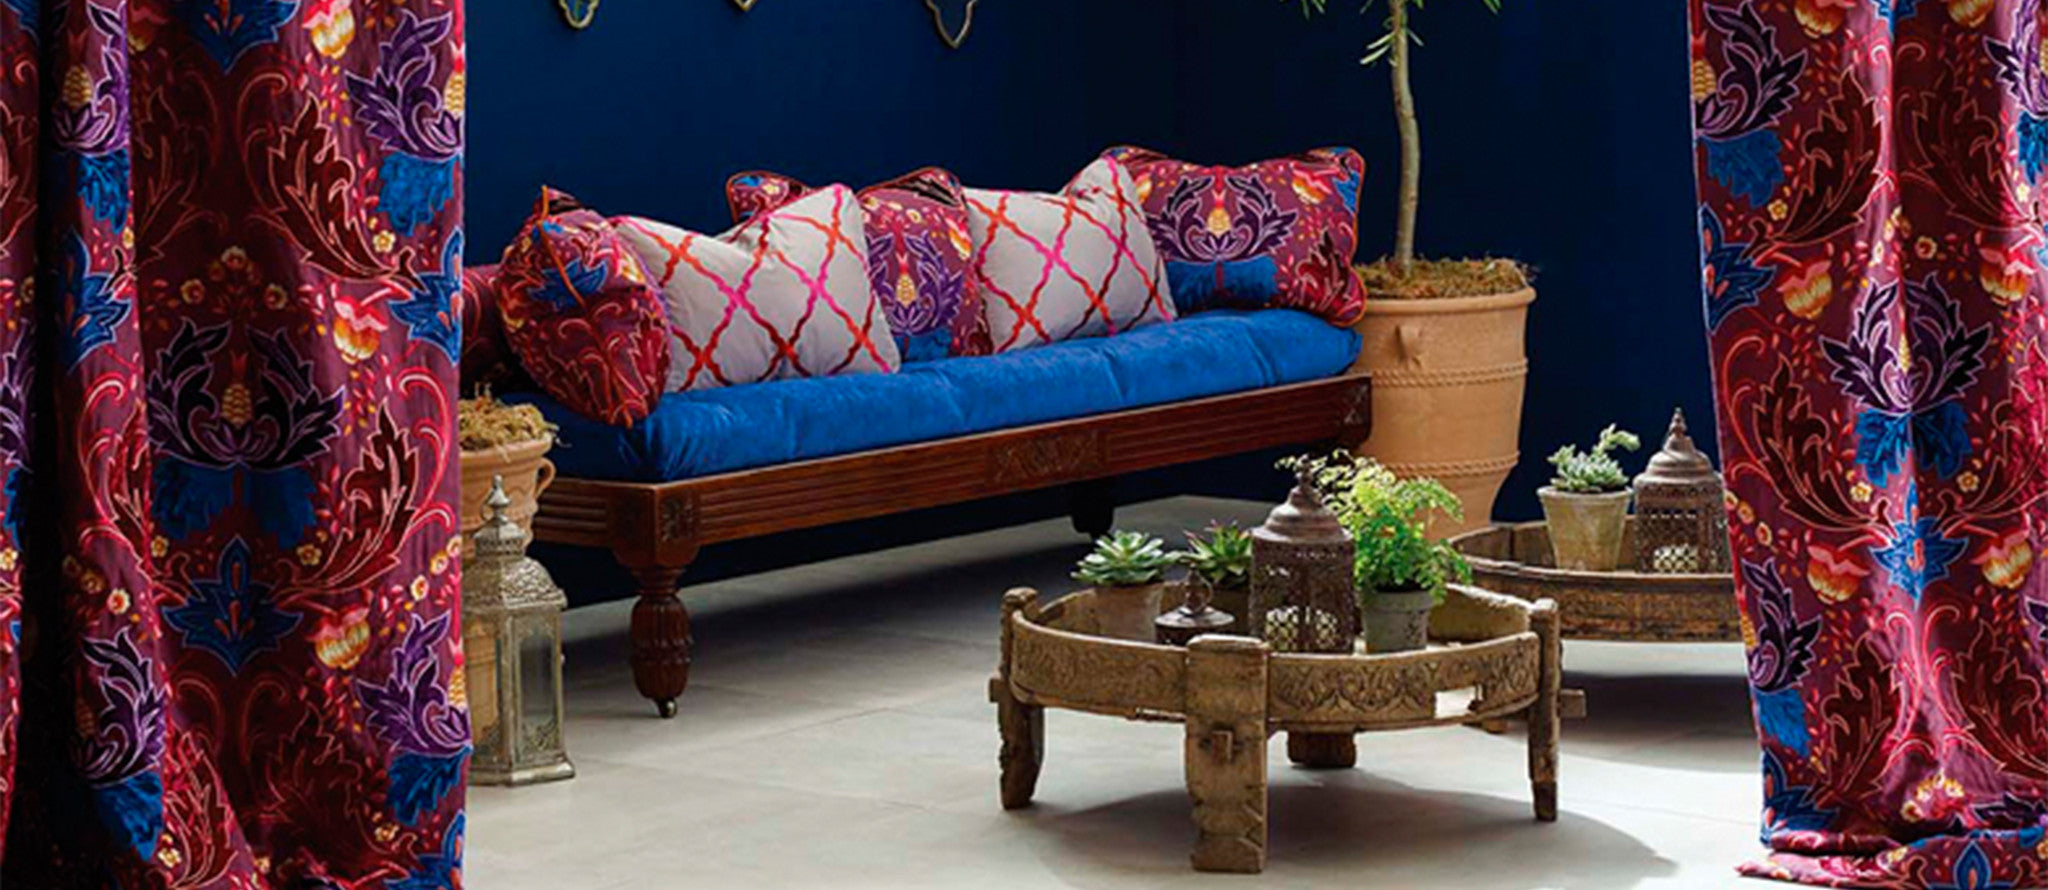 Beautiful Indian Inspired Fabrics And Wallpaper Interior Design